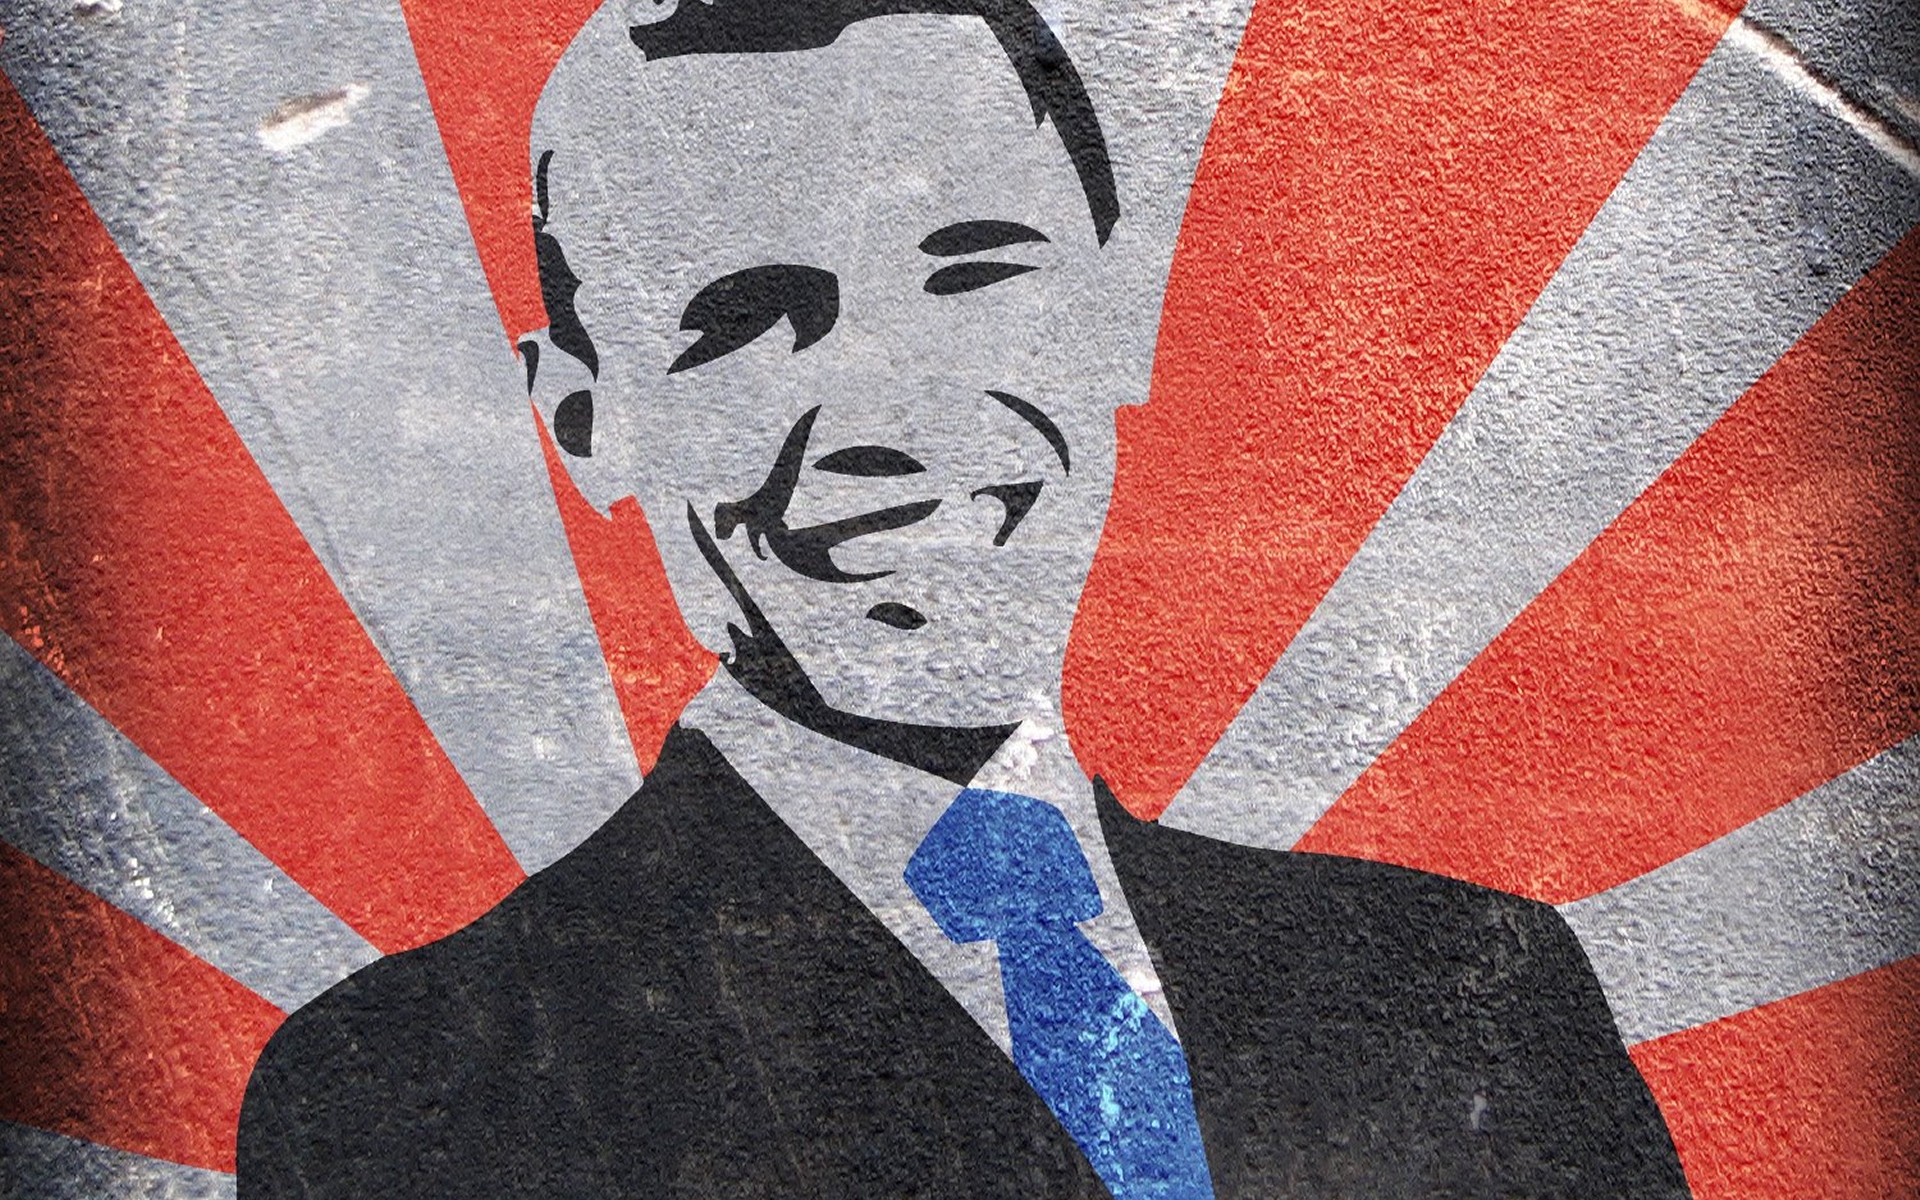 Barack Obama, Grafiti - desktop wallpaper